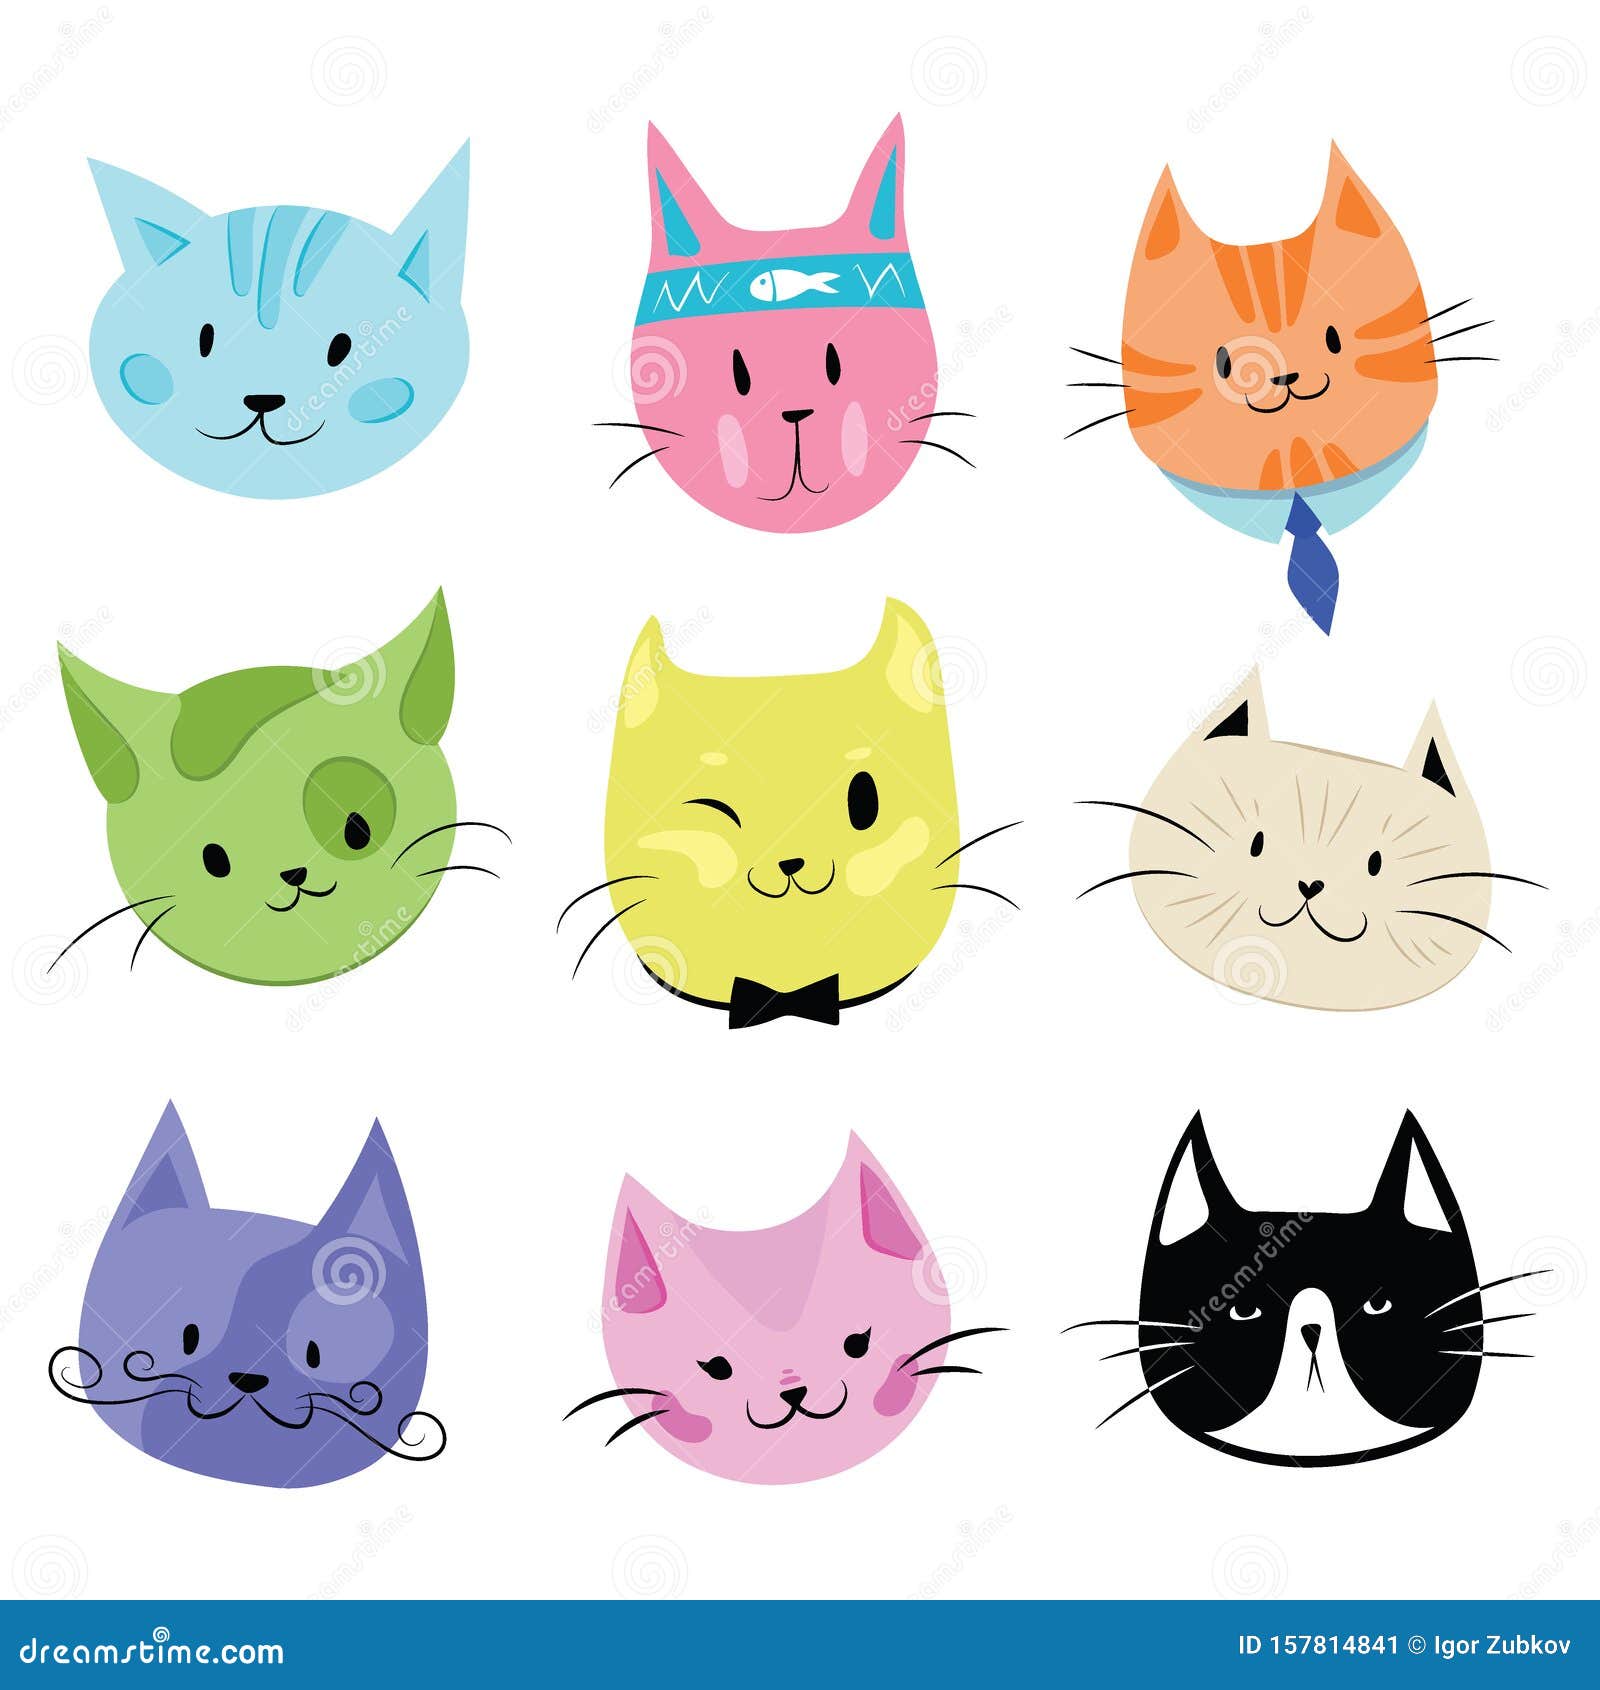 Top 100 Imagenes gatos animados 